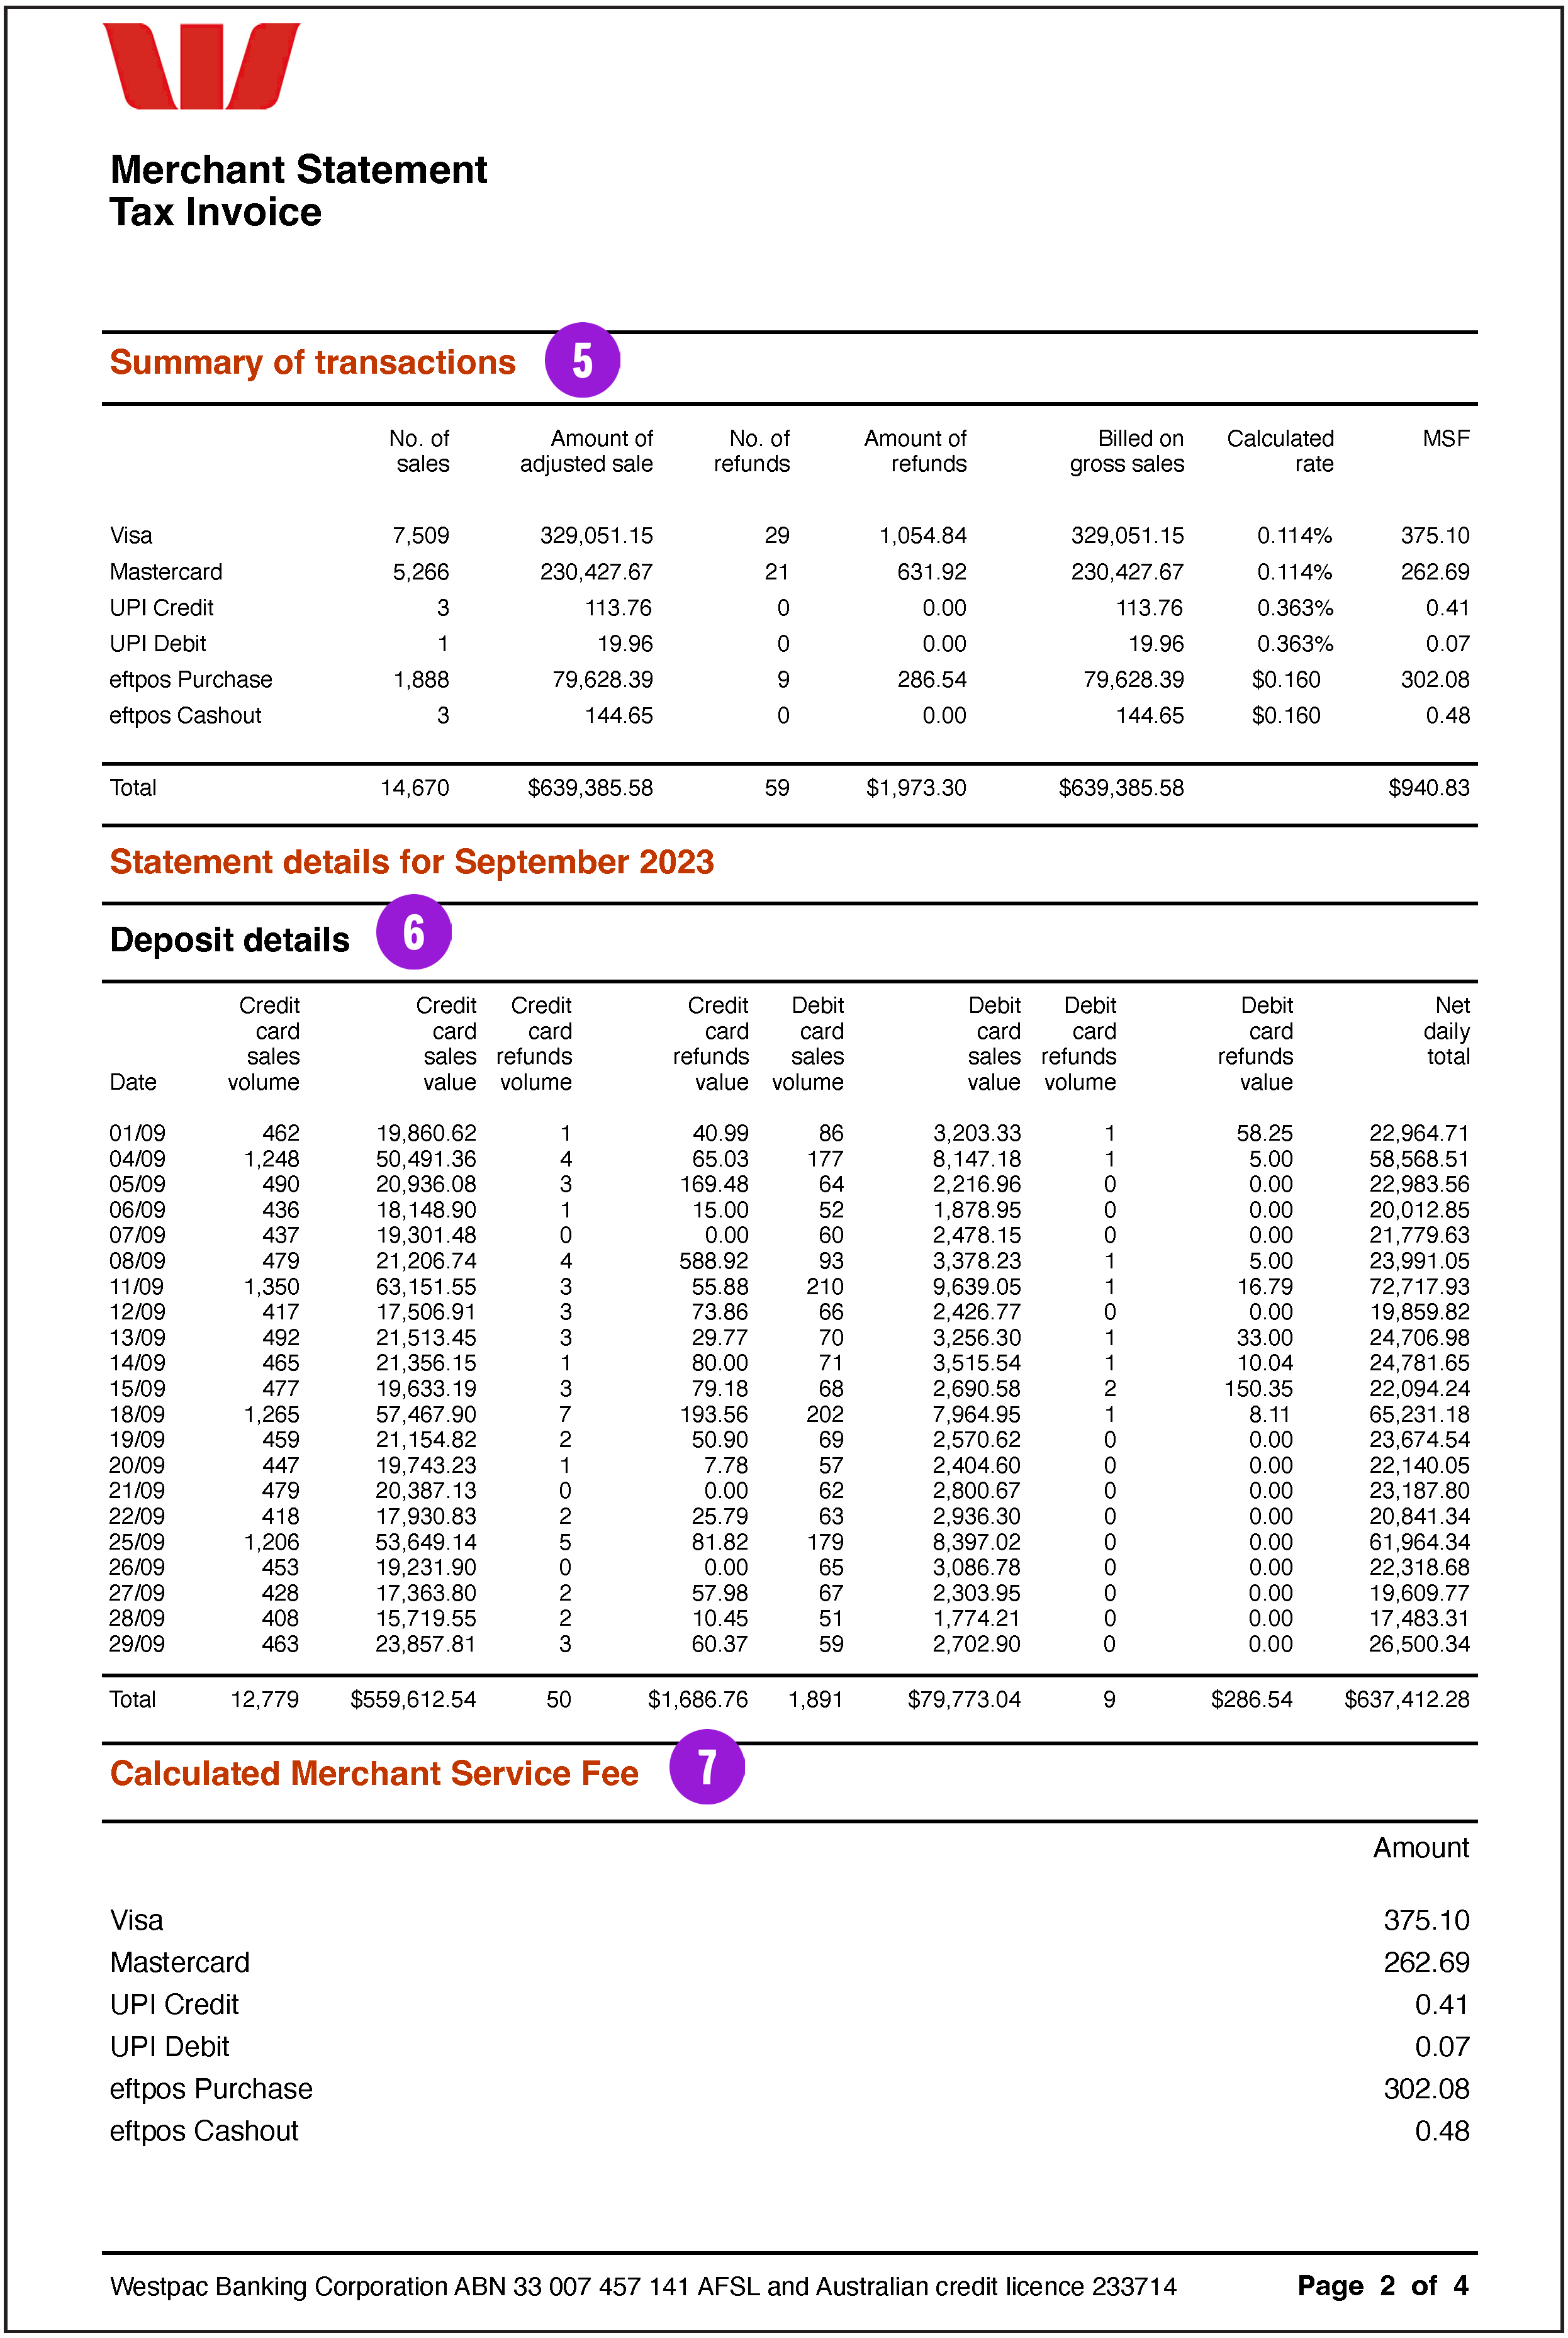 Sample merchant statement tax invoice page 2